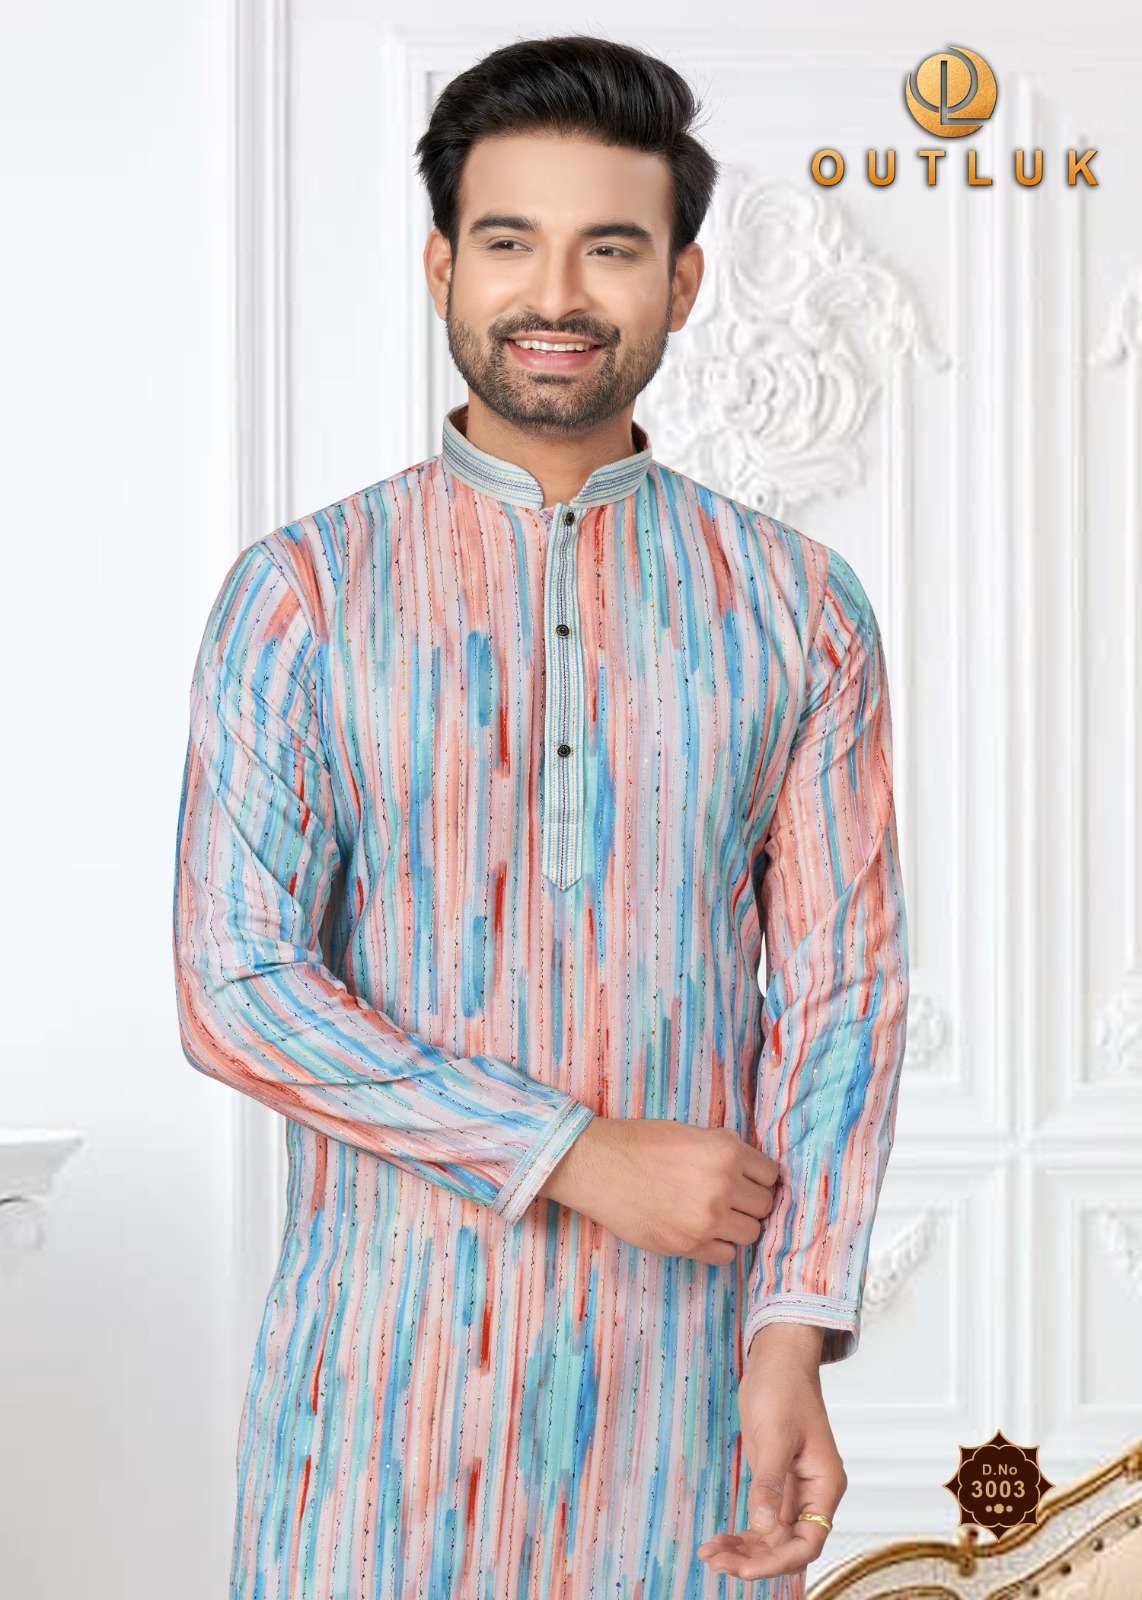 outlook wedding collection vol-3 3001-3006 series latest designer mens kurta pajama wholesaler surat gujarat